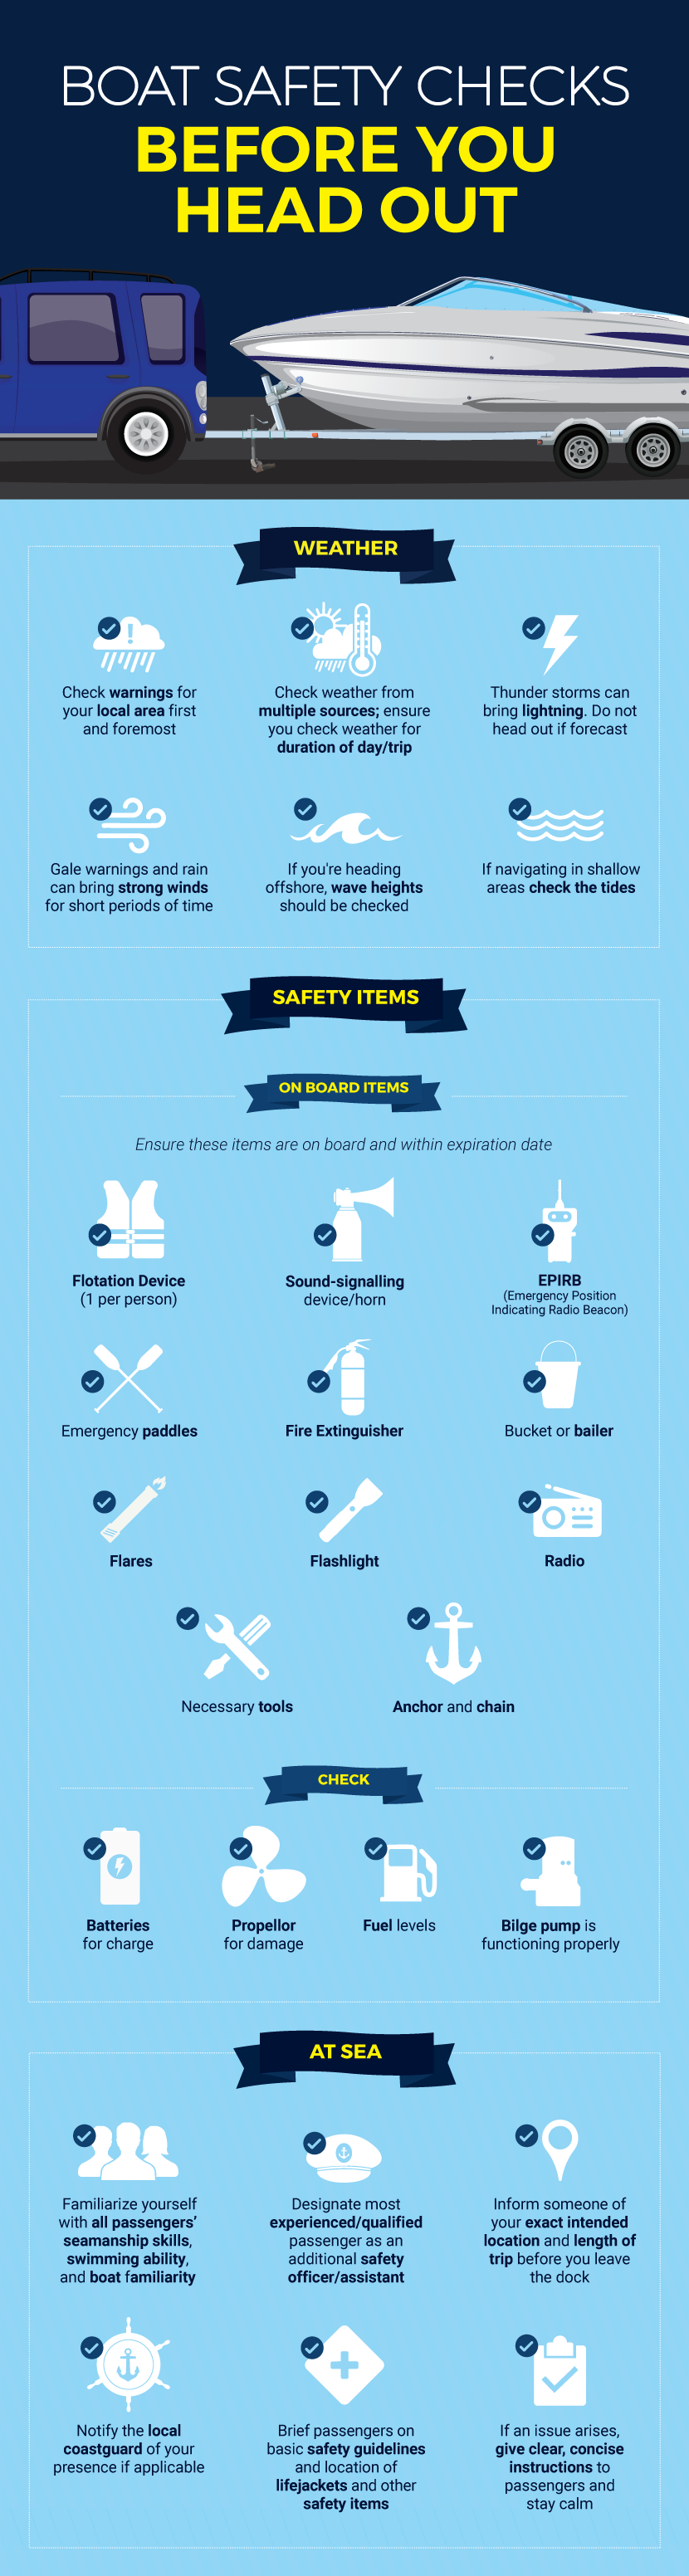 Boat Maintenance - Boat Safety Checklist